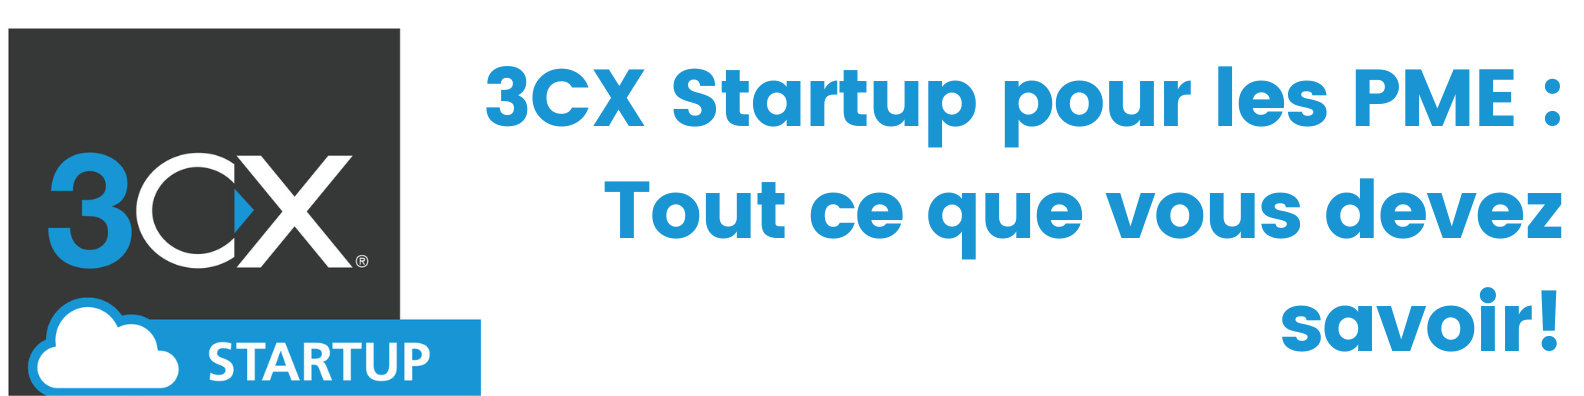 3CX Startup